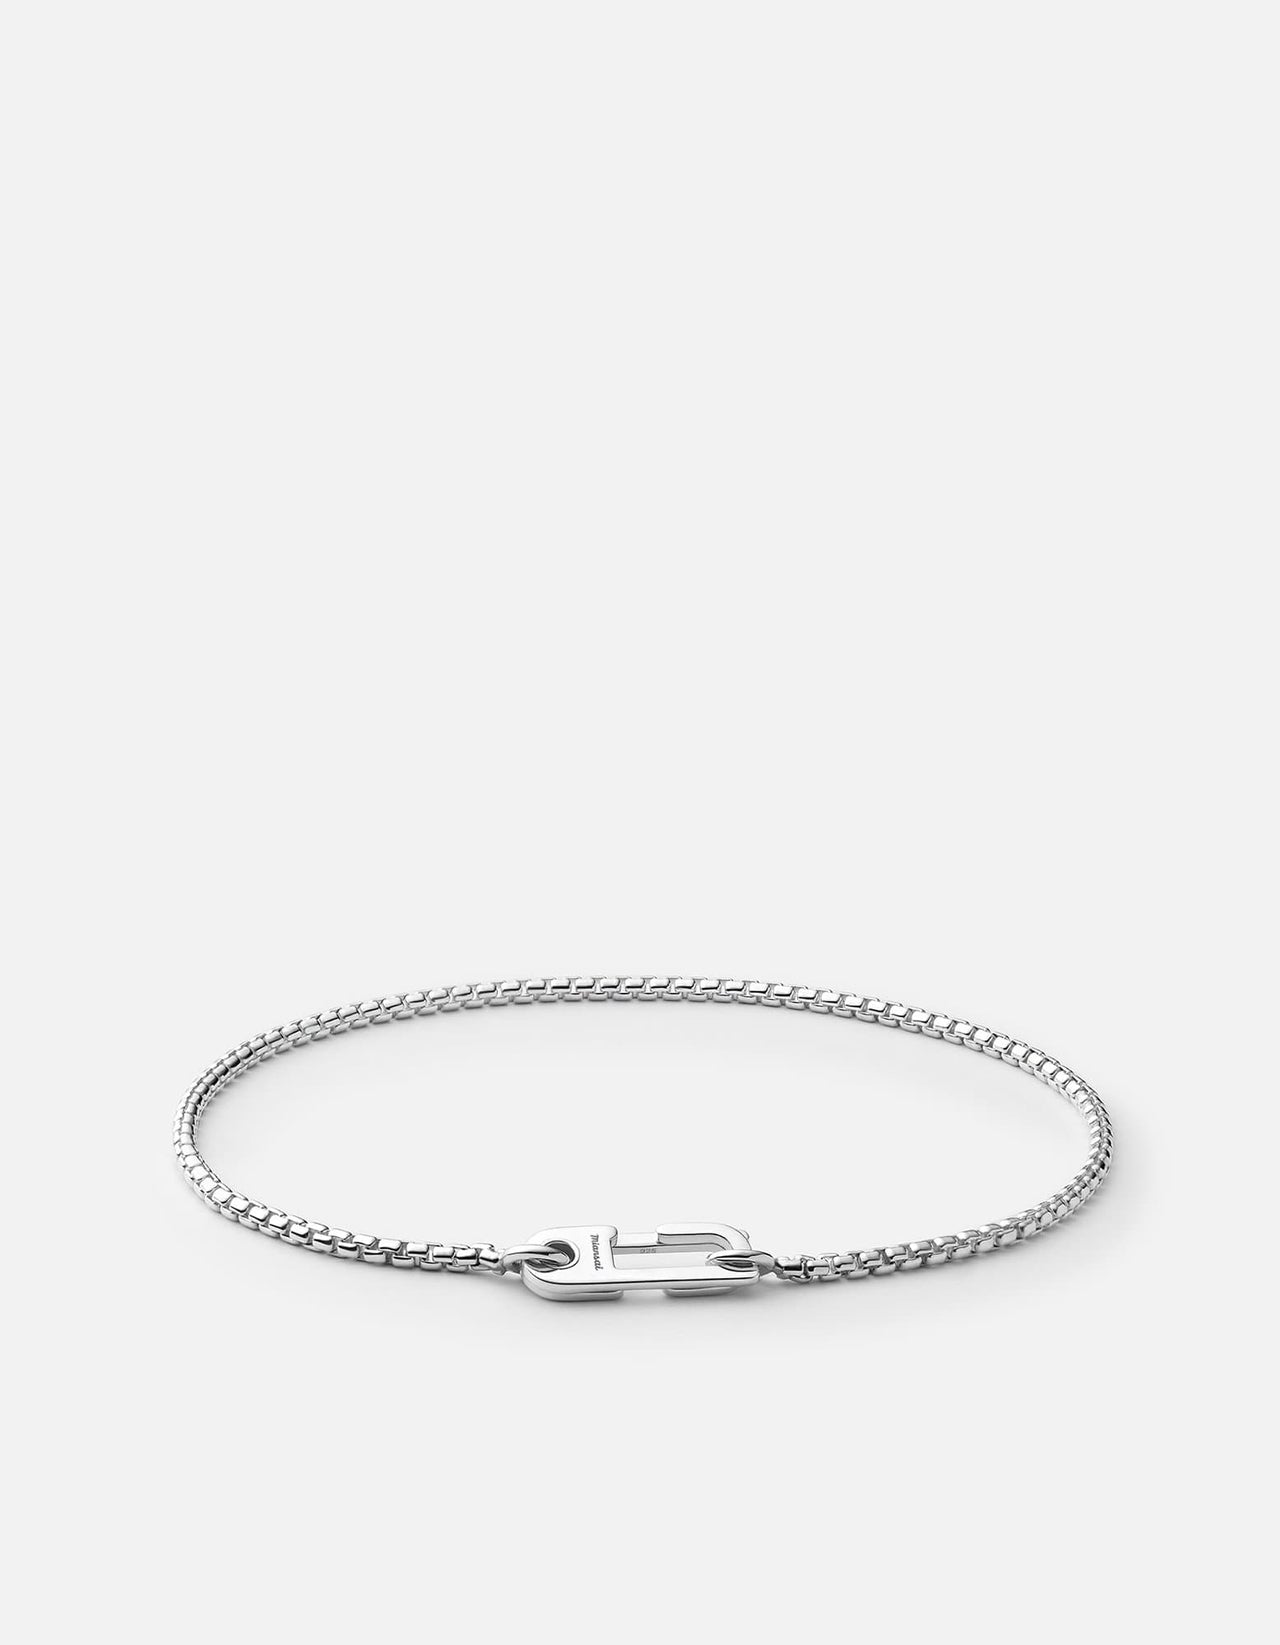 Annex Venetian Chain Bracelet, Sterling Silver, Polished, M | Men's ...